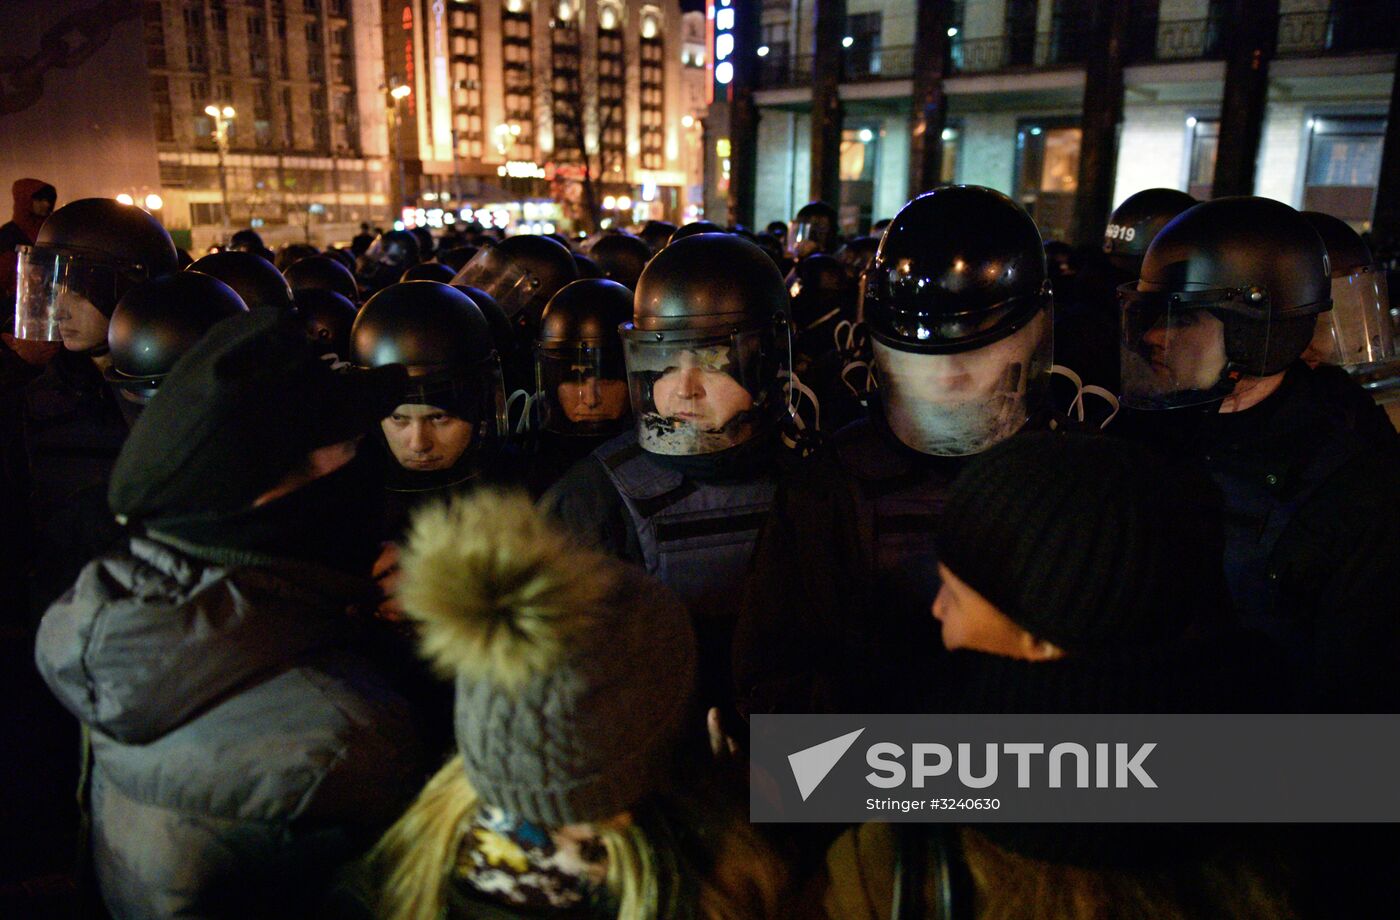 Maidan anniversary rally in Kiev